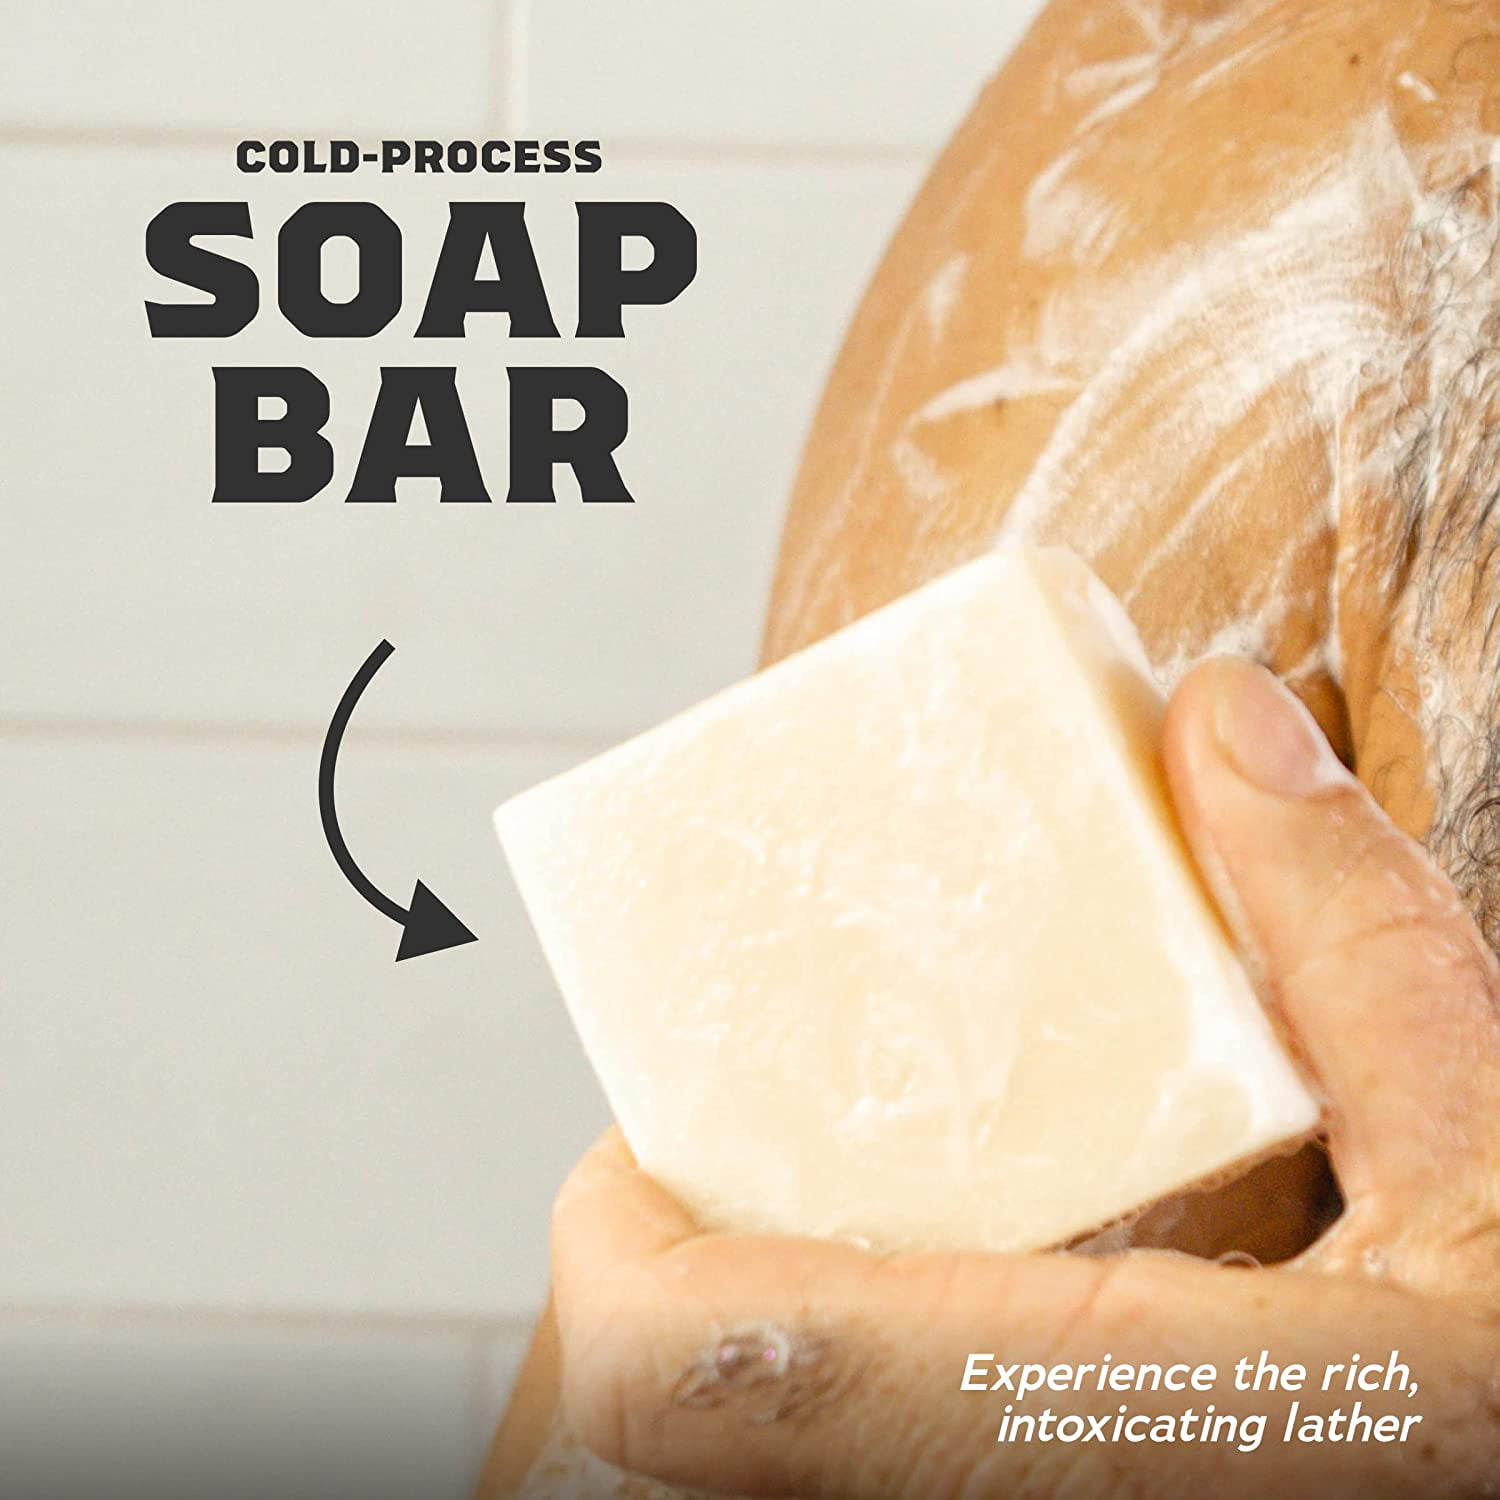 Dr. Squatch Spearmint Basil Scrub Bar Soap –